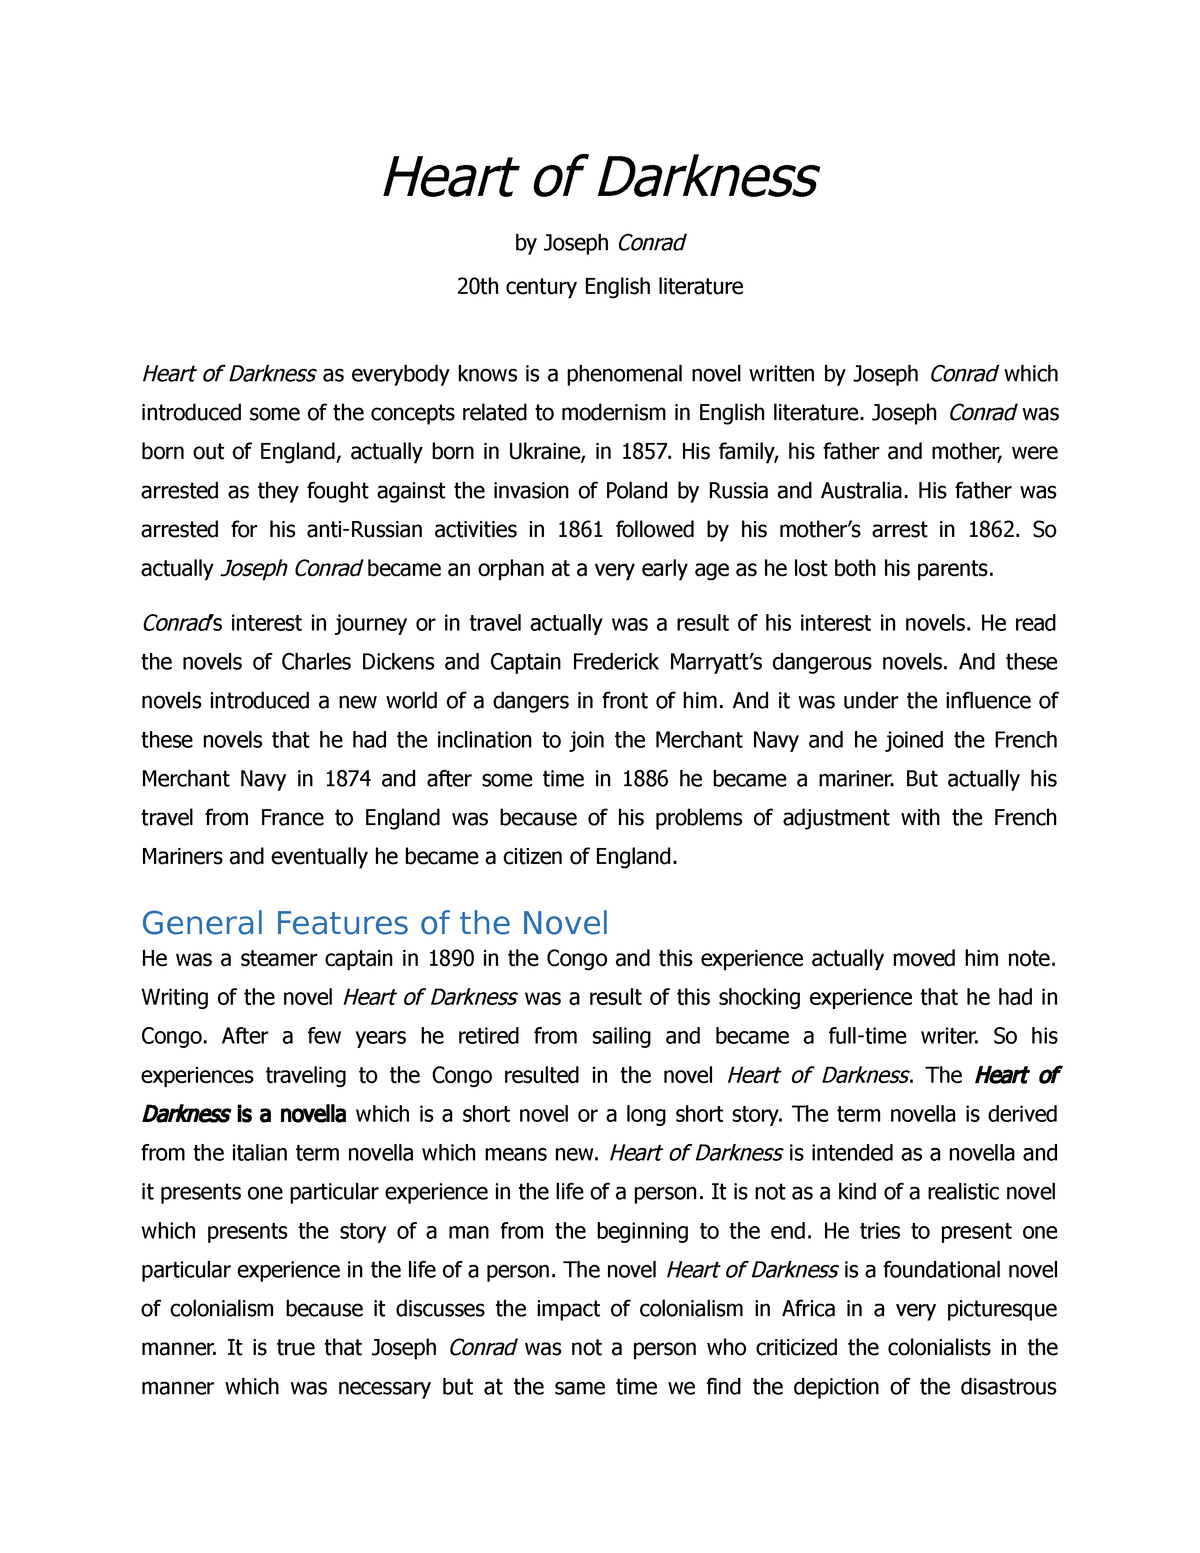 heart of darkness essay ideas